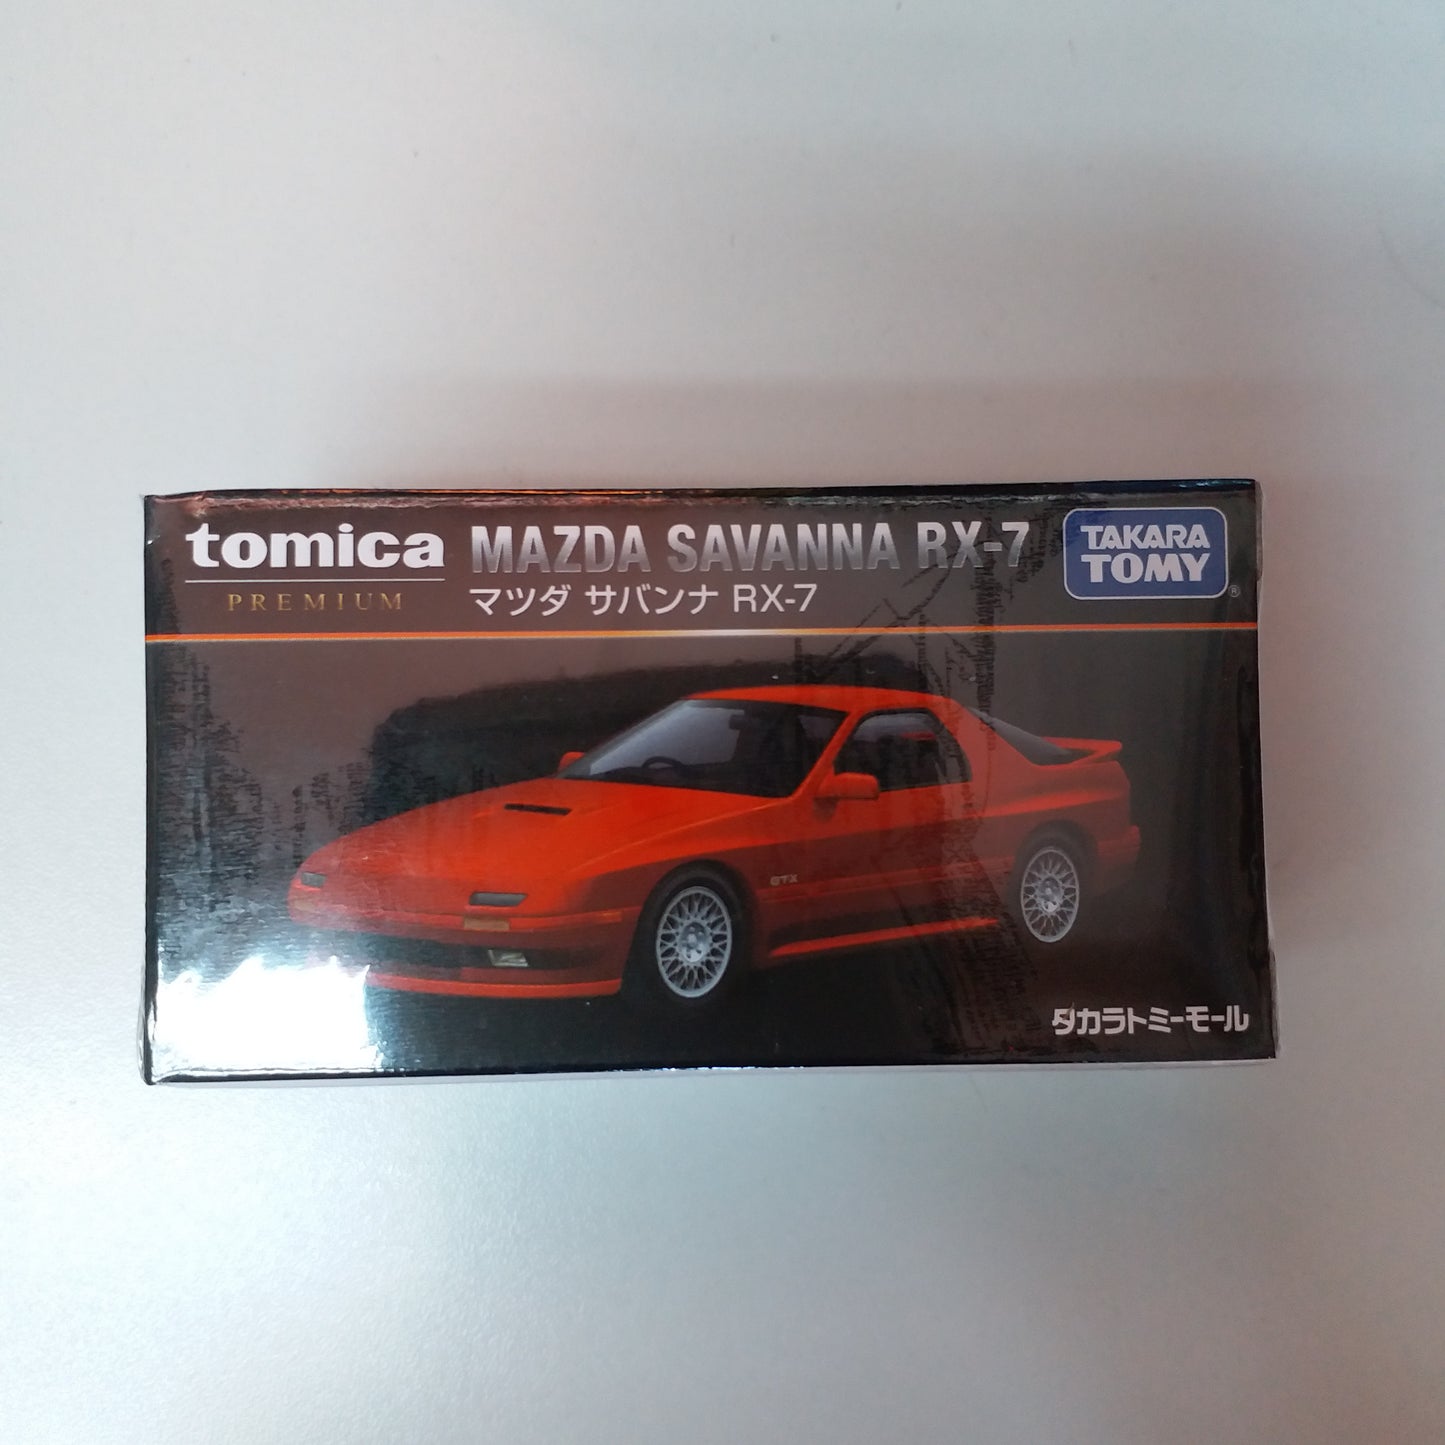 Takara Tomy Mall Original Tomica Premium
Mazda Savannah RX-7 1:62 SCALE